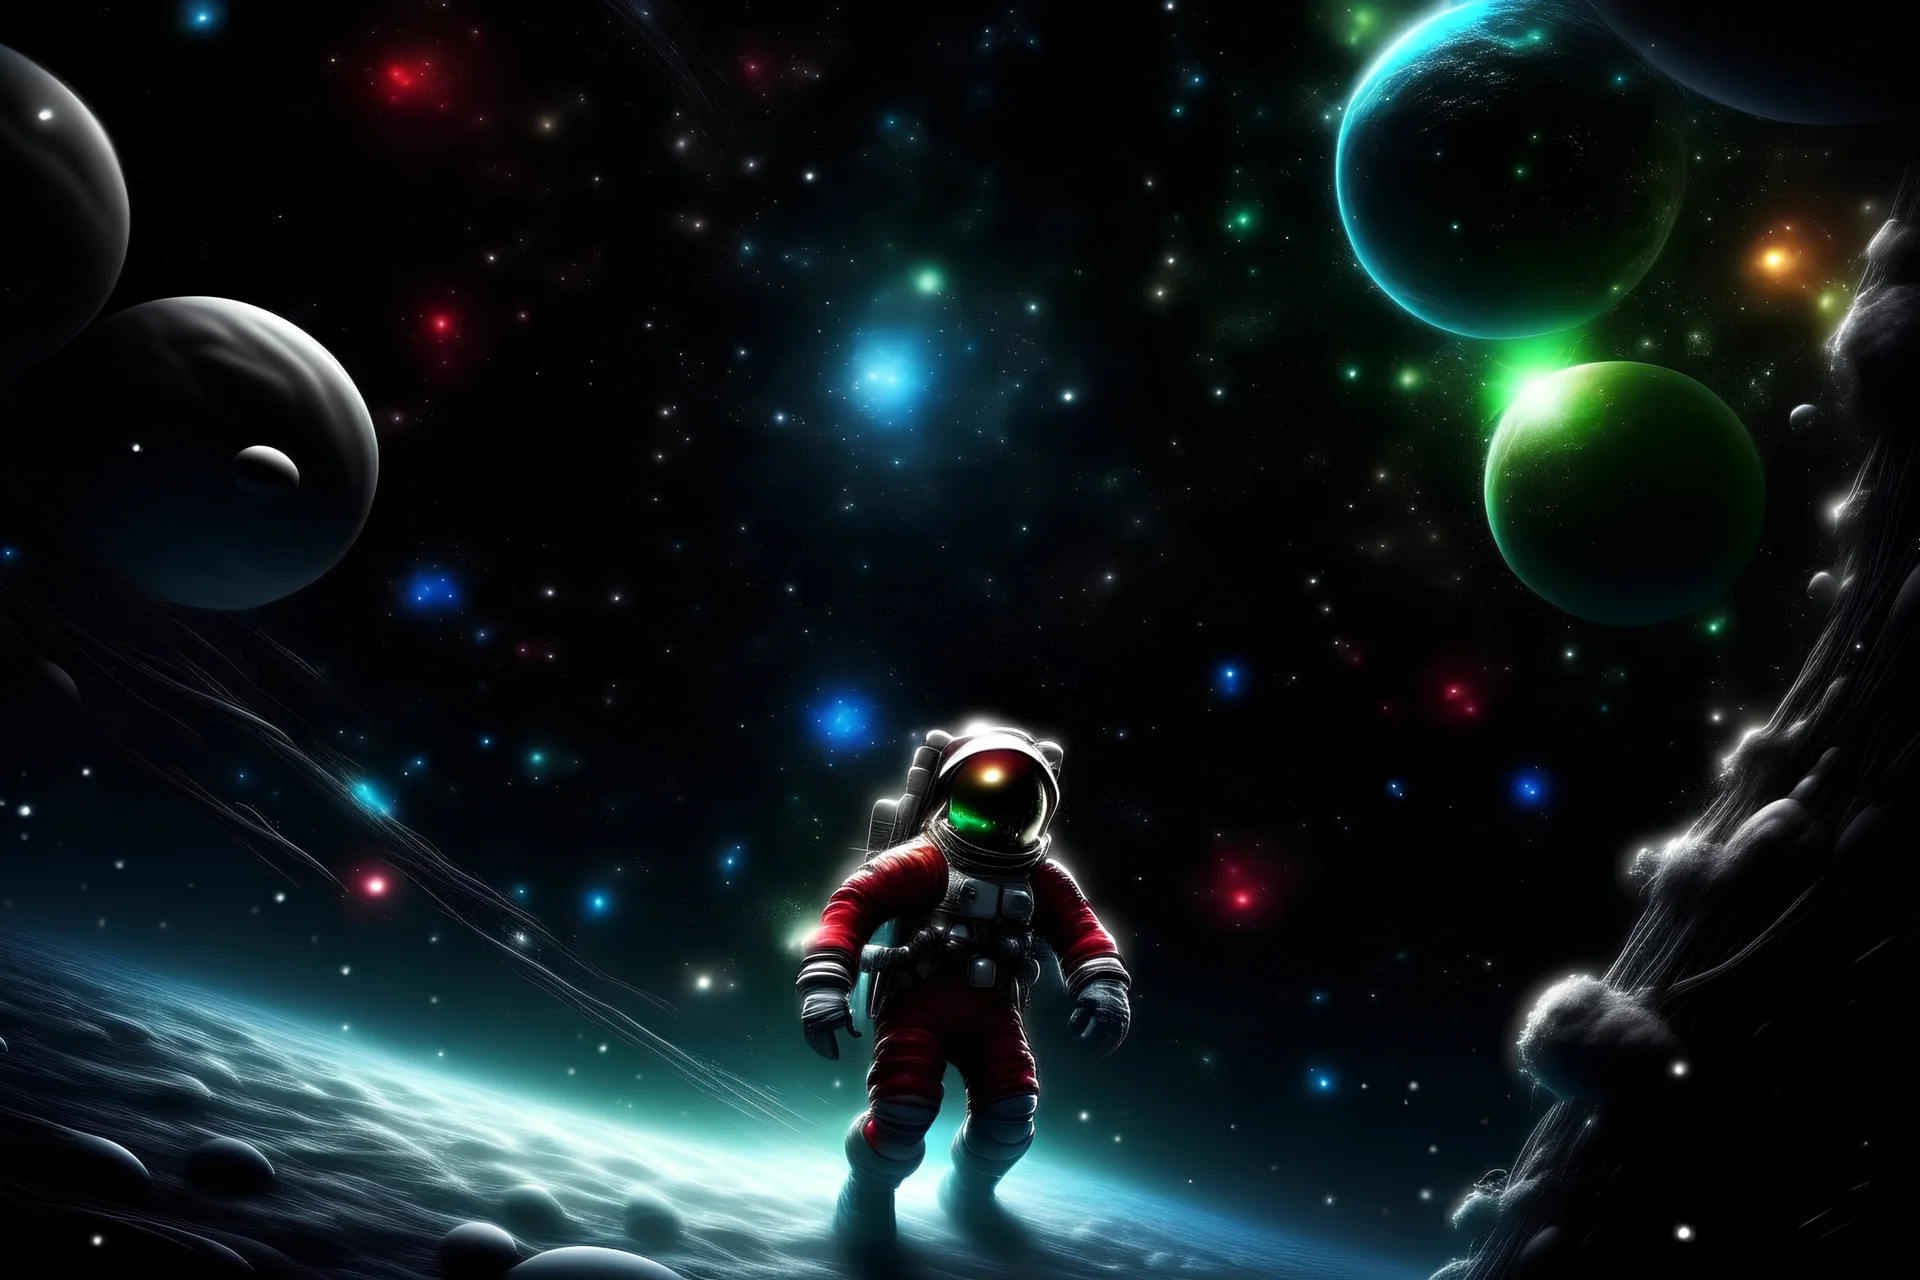 Christmas in deep space